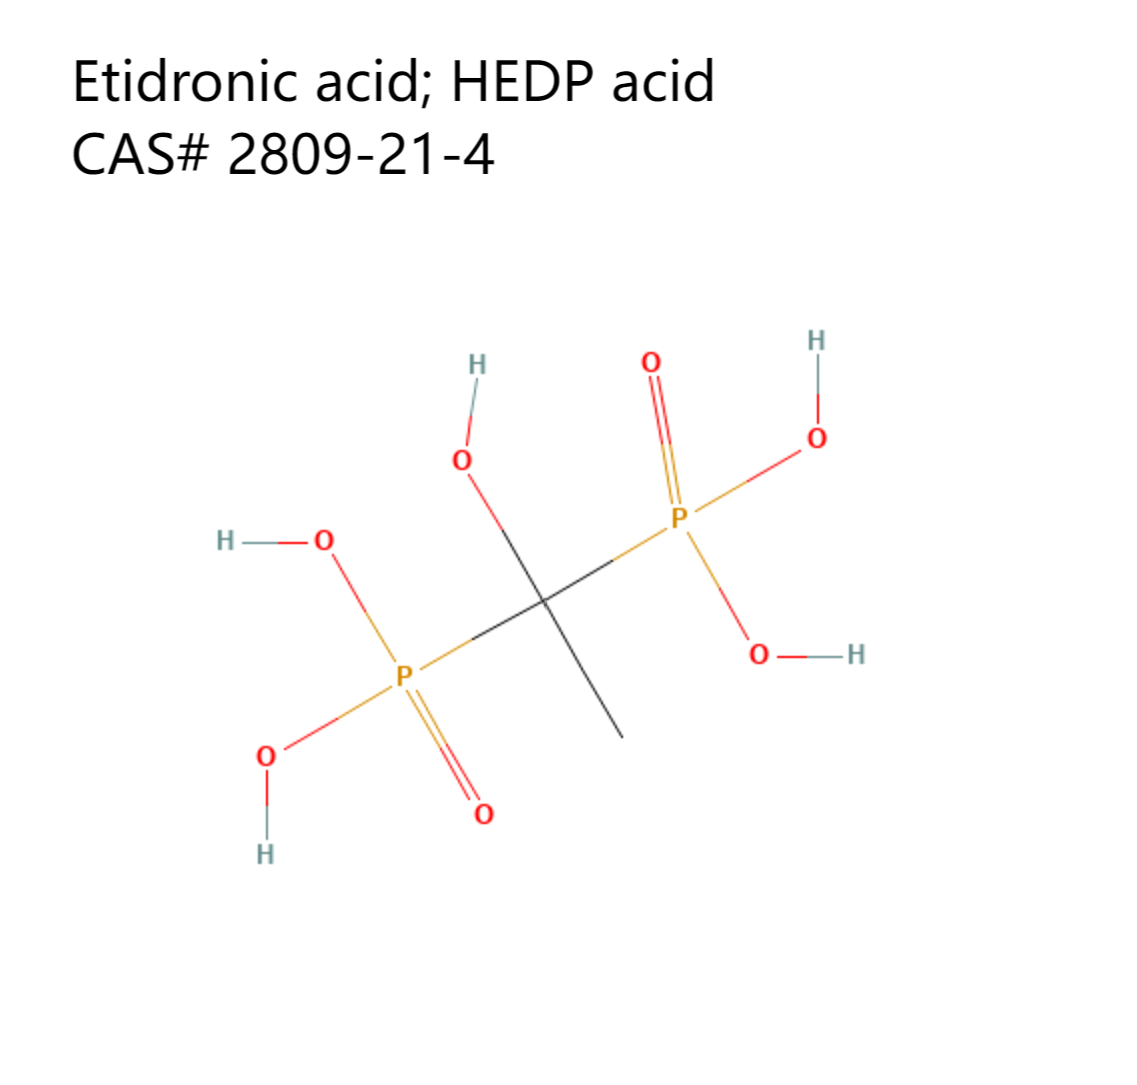 Etidronic acid, HEDP